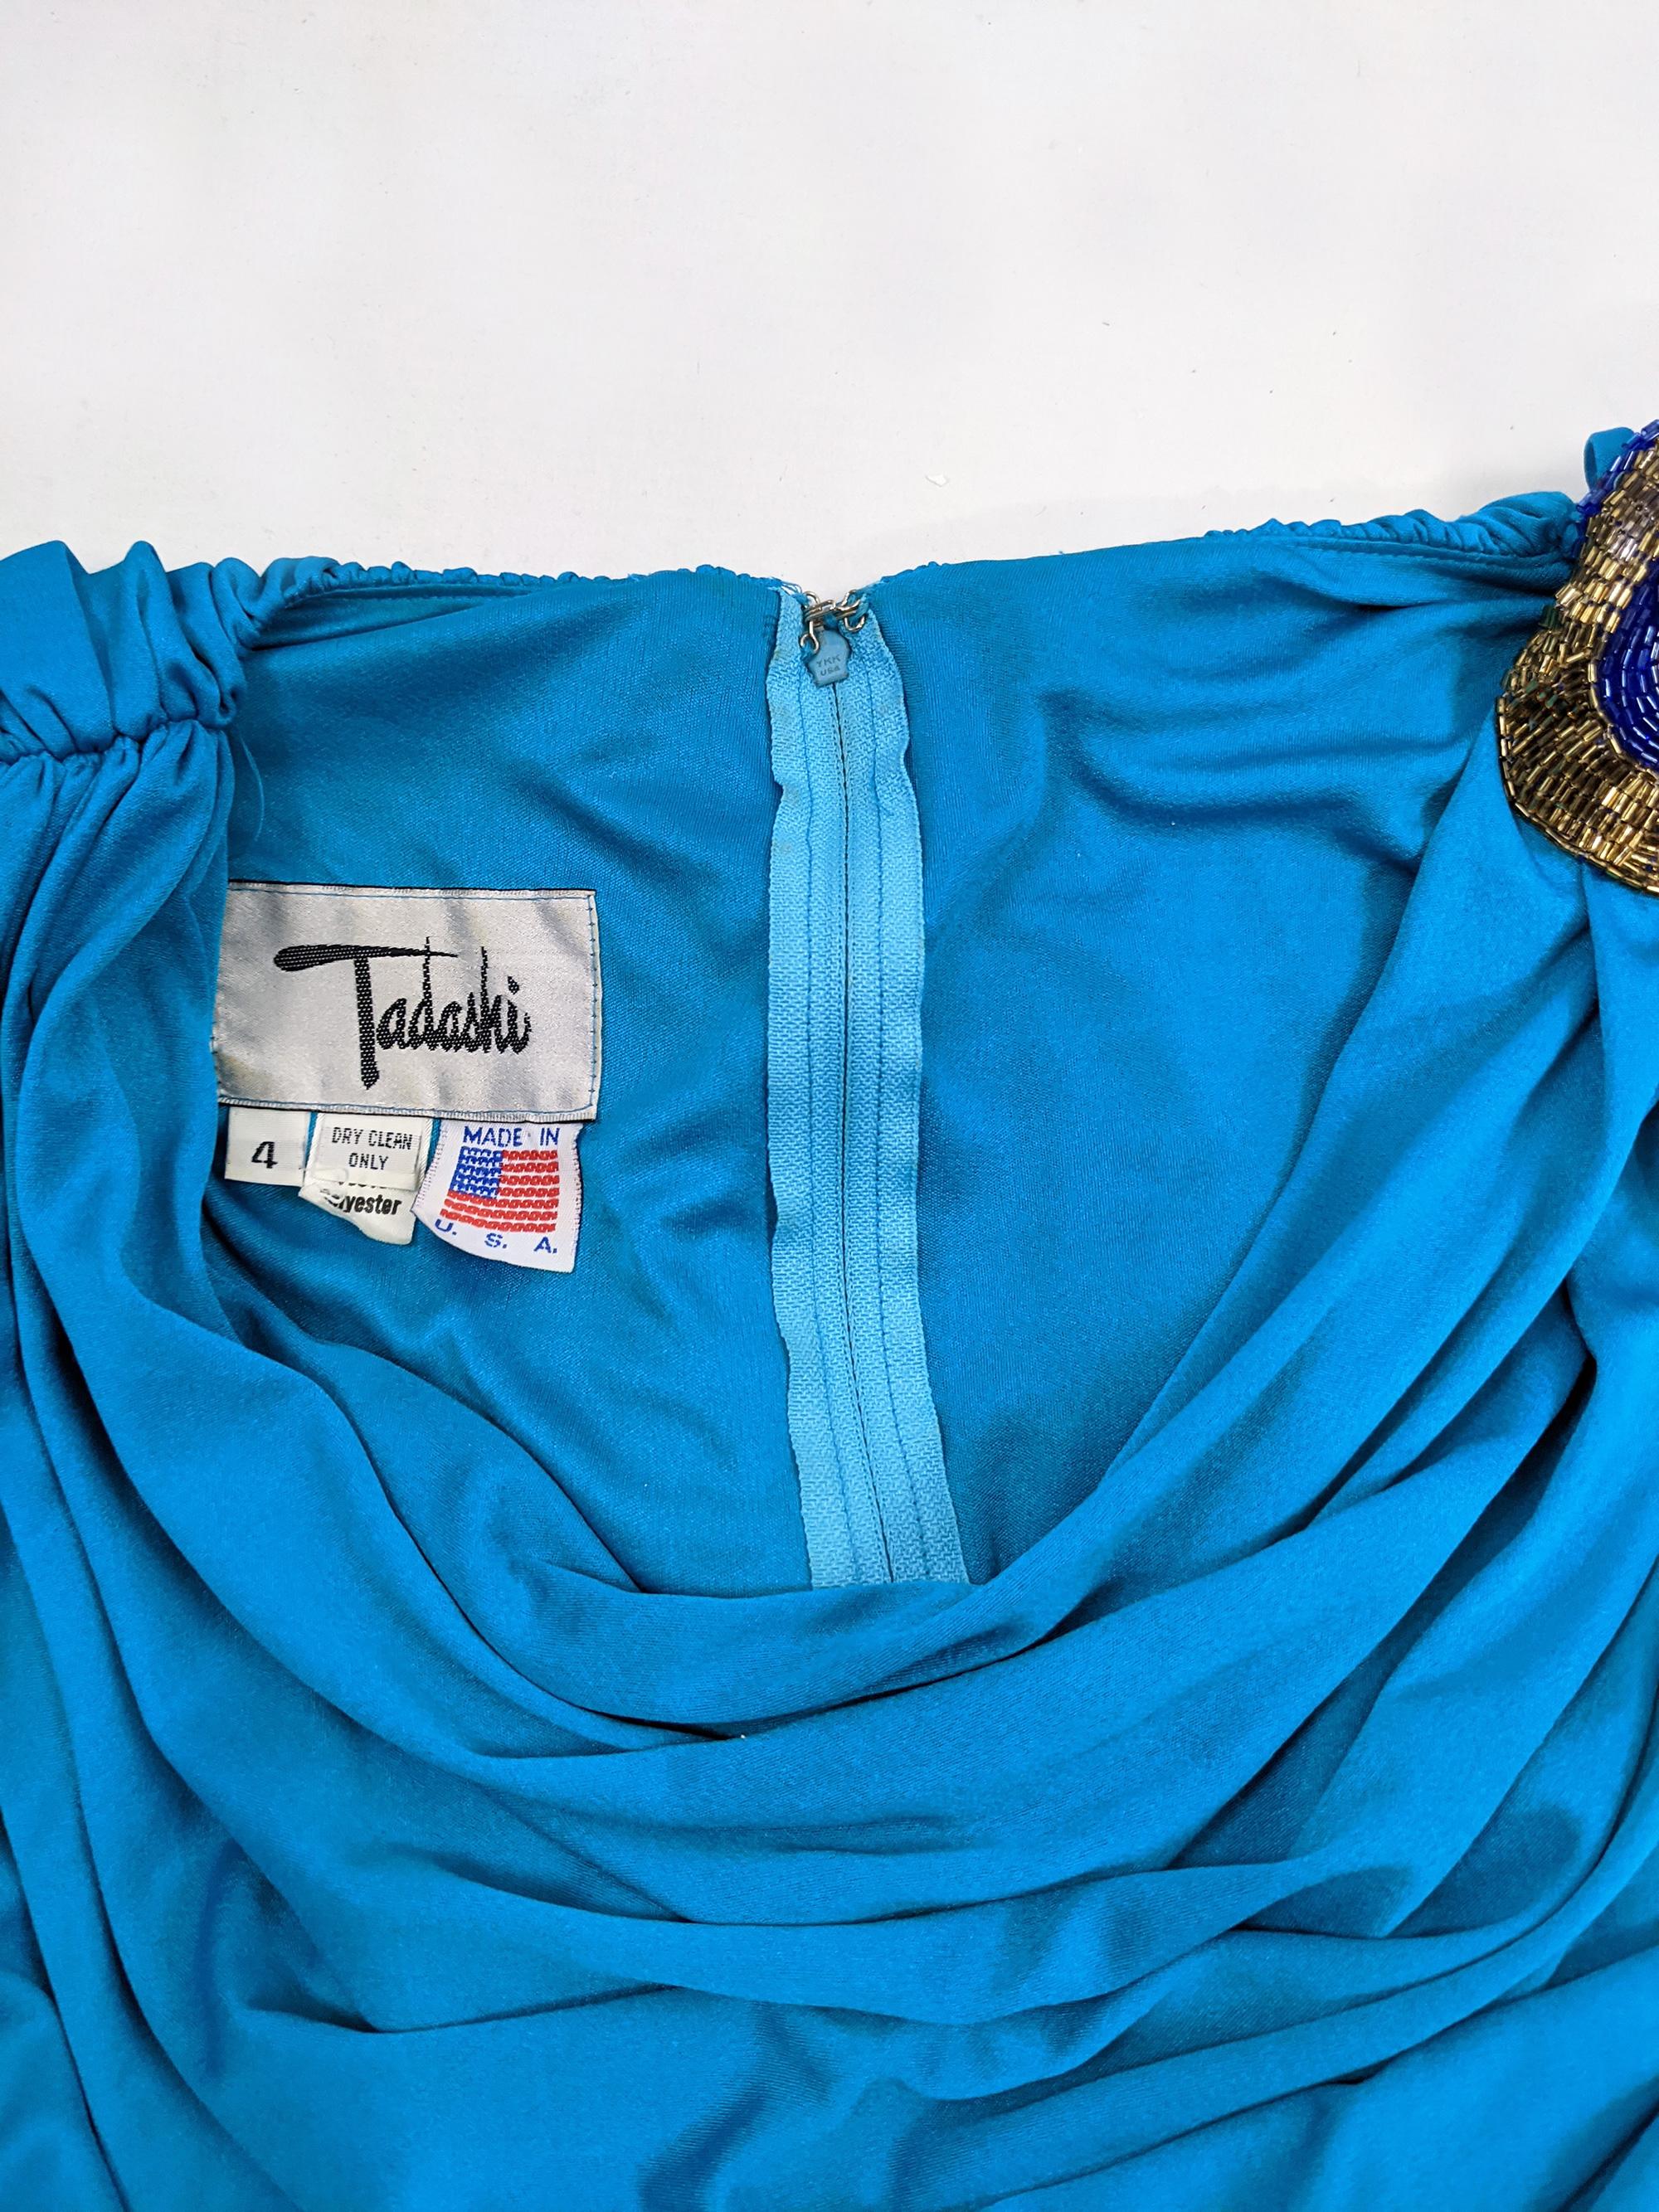 Tadashi Vintage 80s Blue Slinky Draped Jersey Gold Sequin Shoulder Party Dress For Sale 4